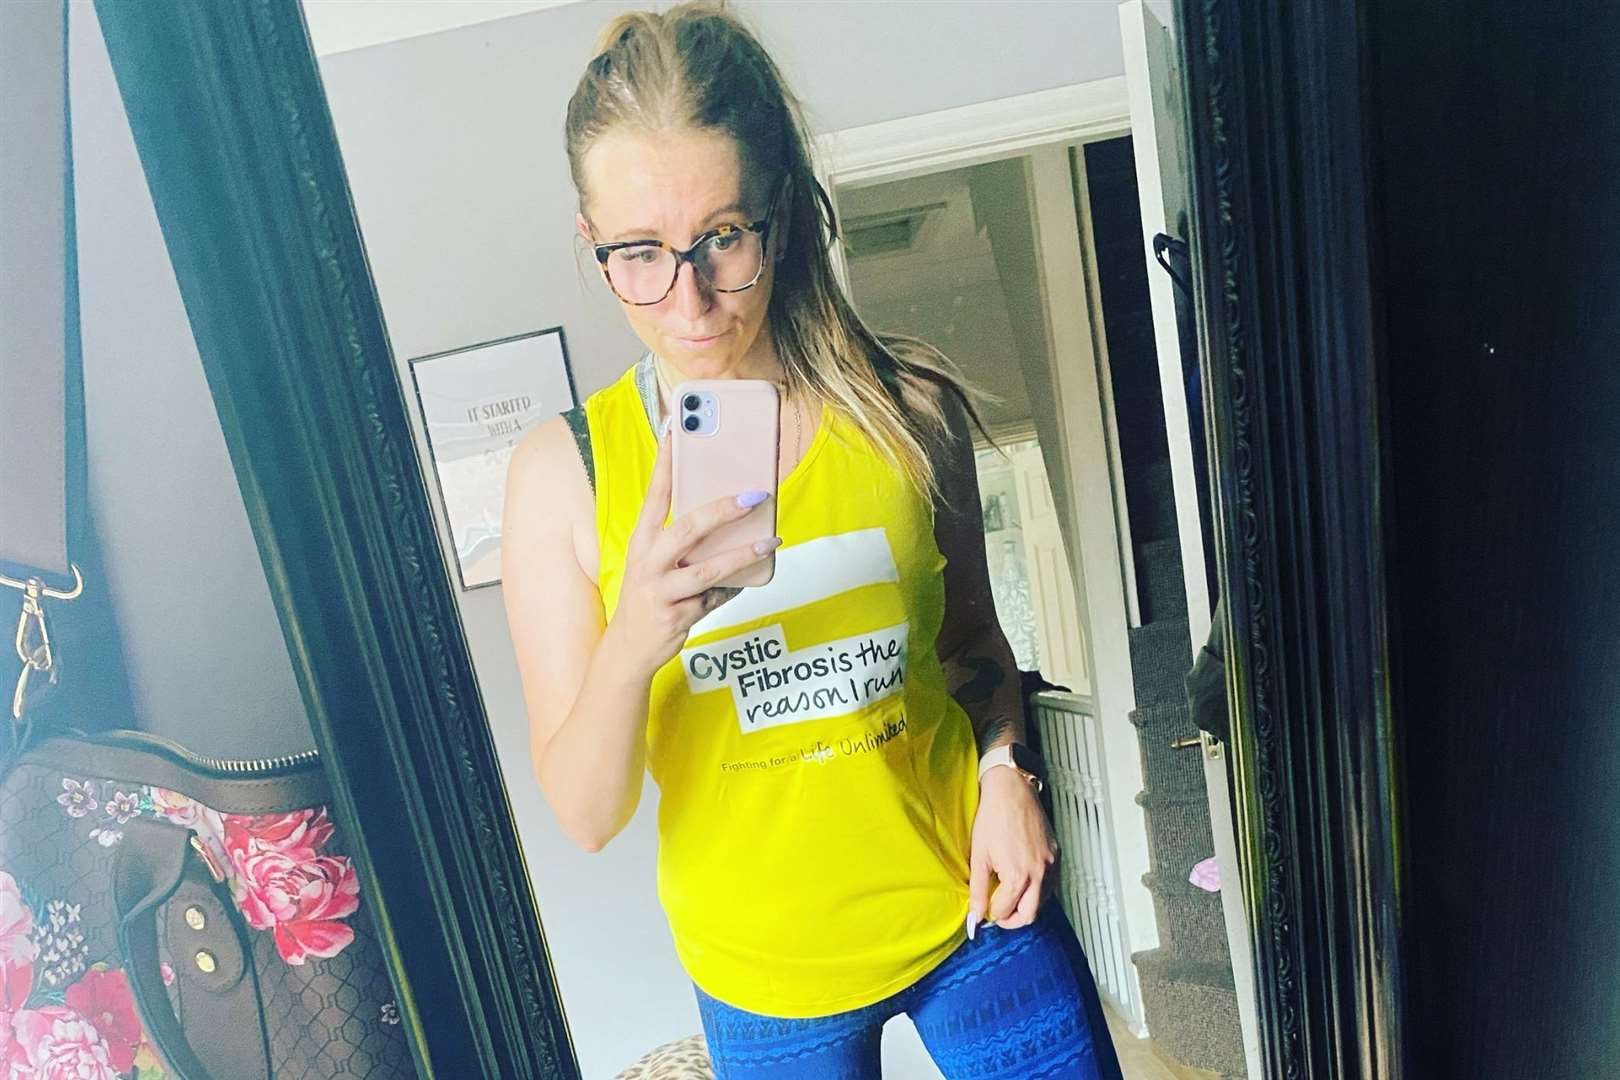 Bethany Wood is running the London Marathon